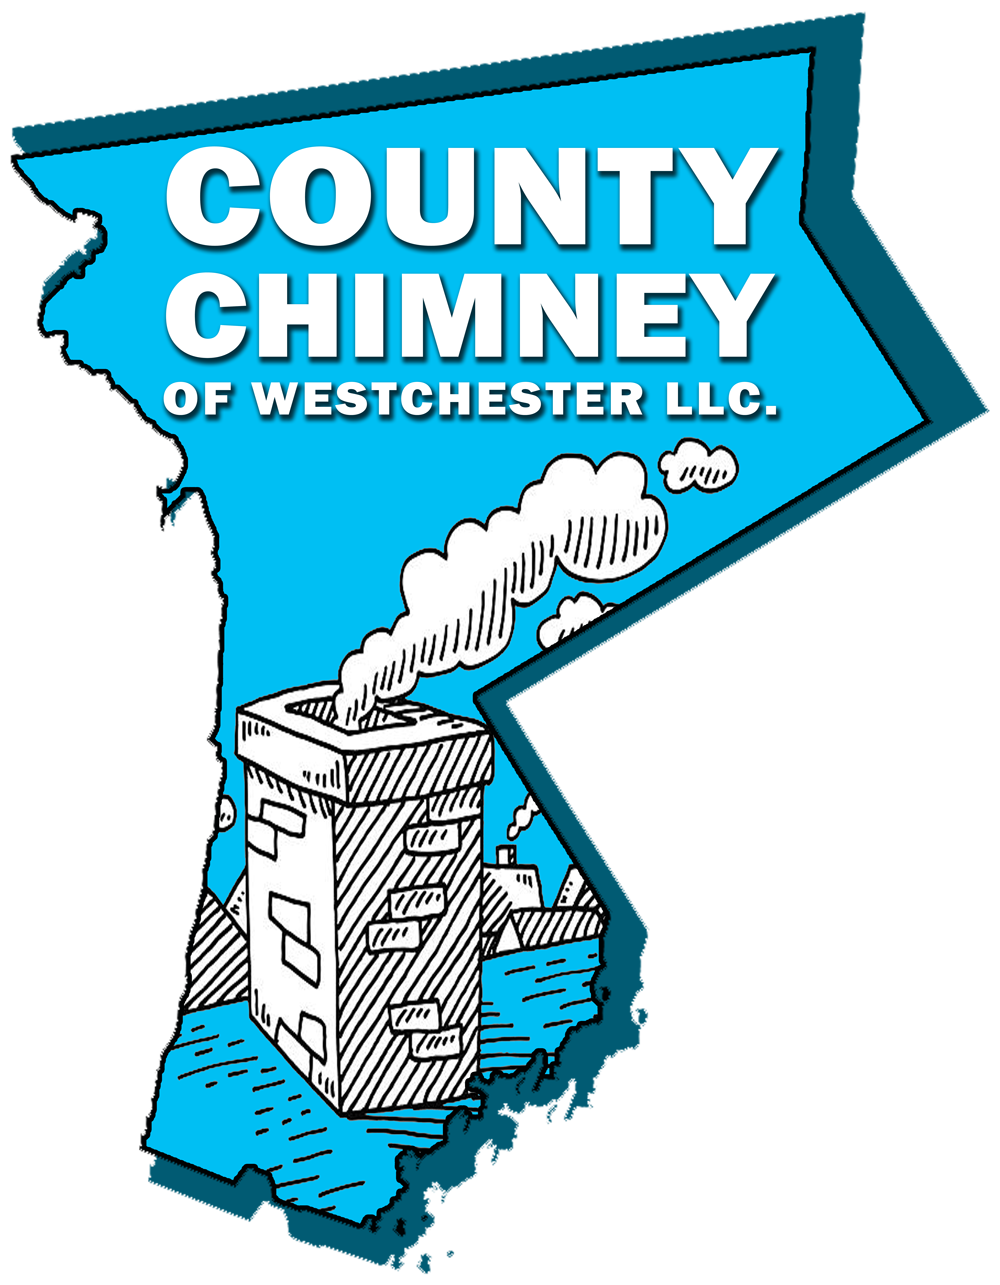 County Chimney of Westchester LLC.